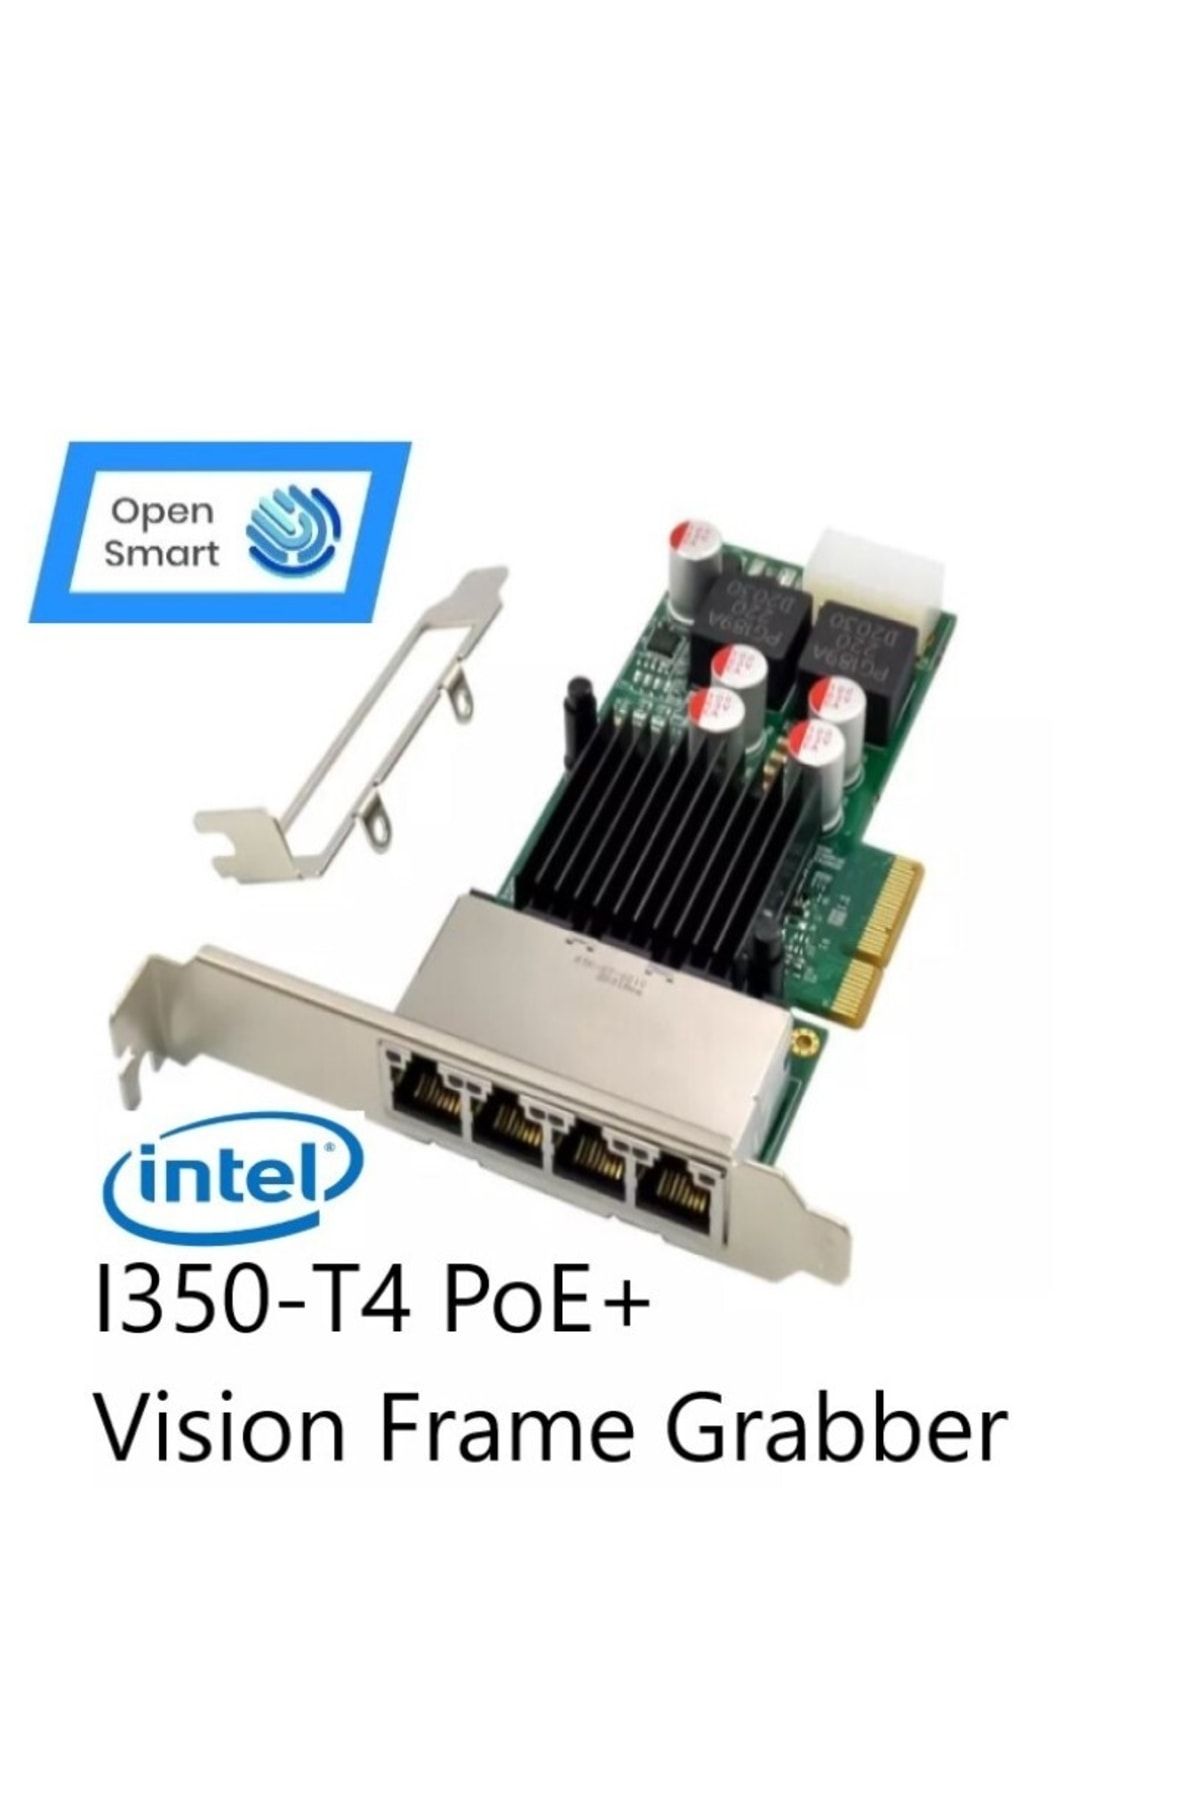 Open Smart Intel I350am4 Quad Port 1gbe Poe+ Vision Frame Grabber Nic Adapter - Ops7246nt